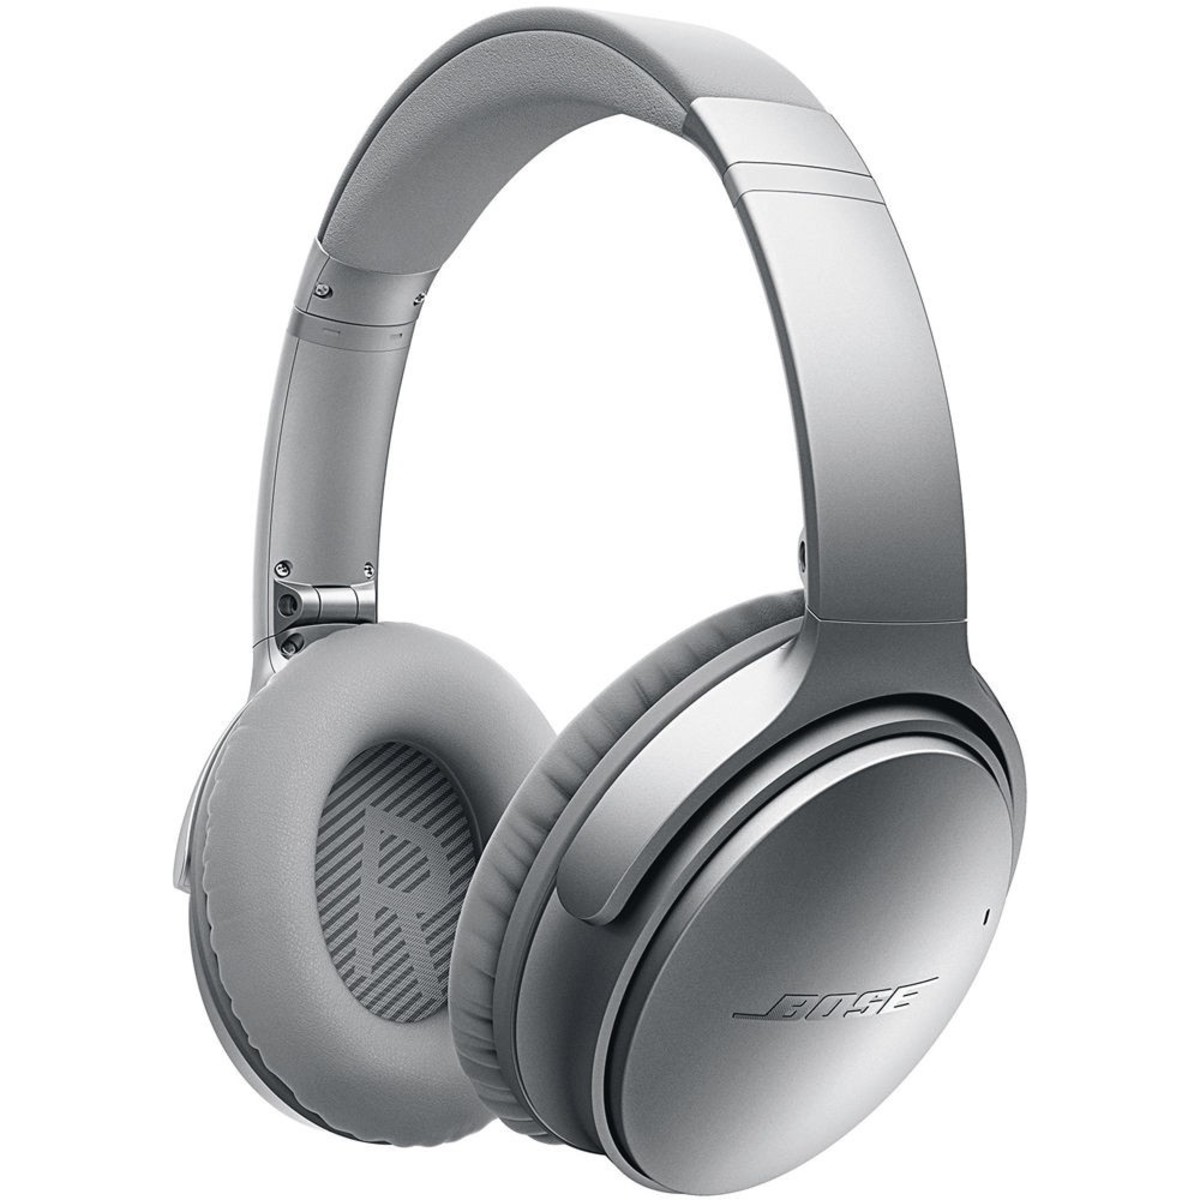 Bose QuietComfort 35 Wireless headphone Silver